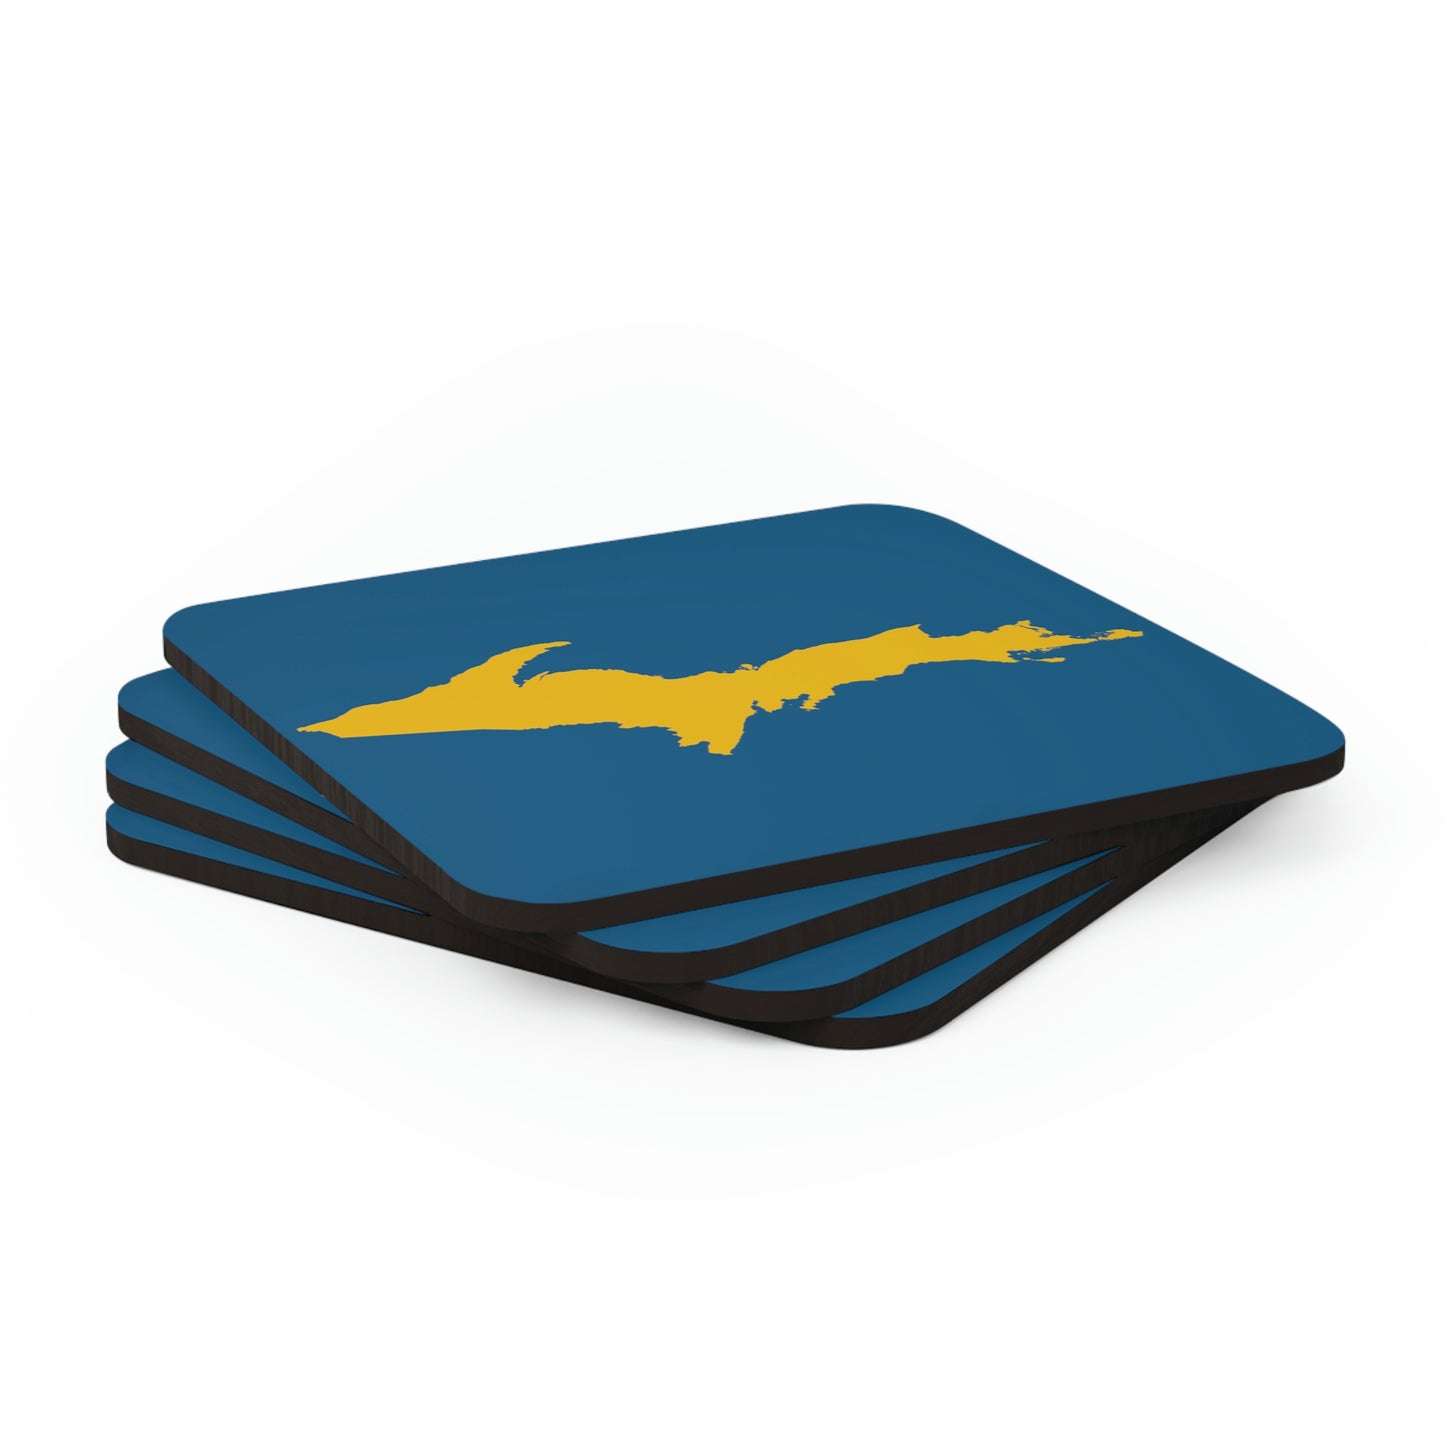 Michigan Upper Peninsula Coaster Set (Blueberry w/ Gold UP Outline) | Corkwood - 4 pack